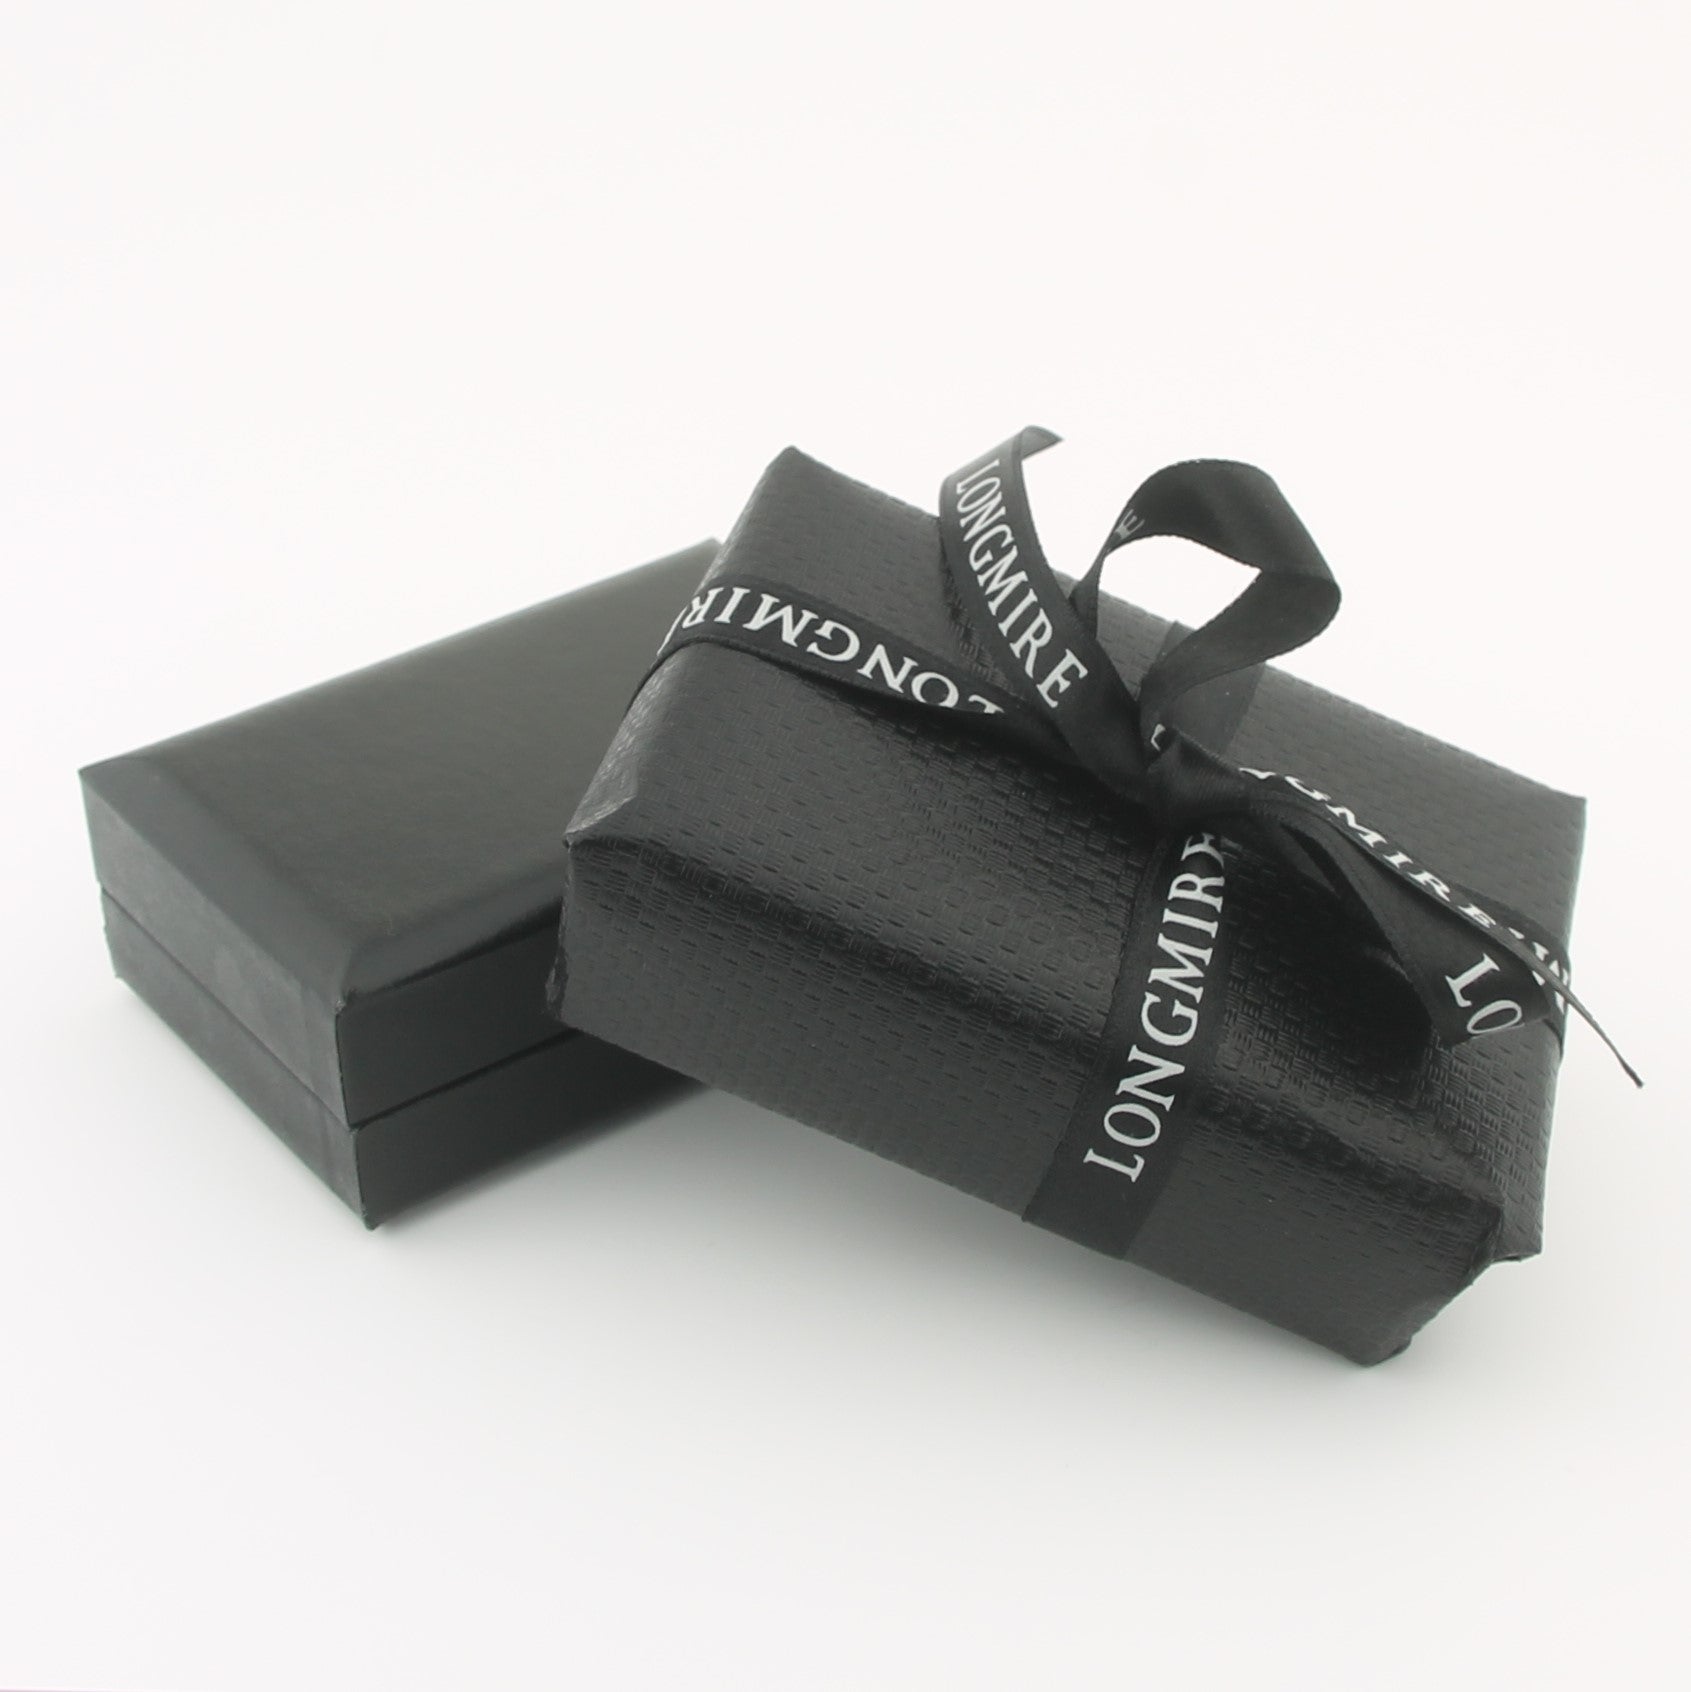 Longmire gift box - gift wrapped 